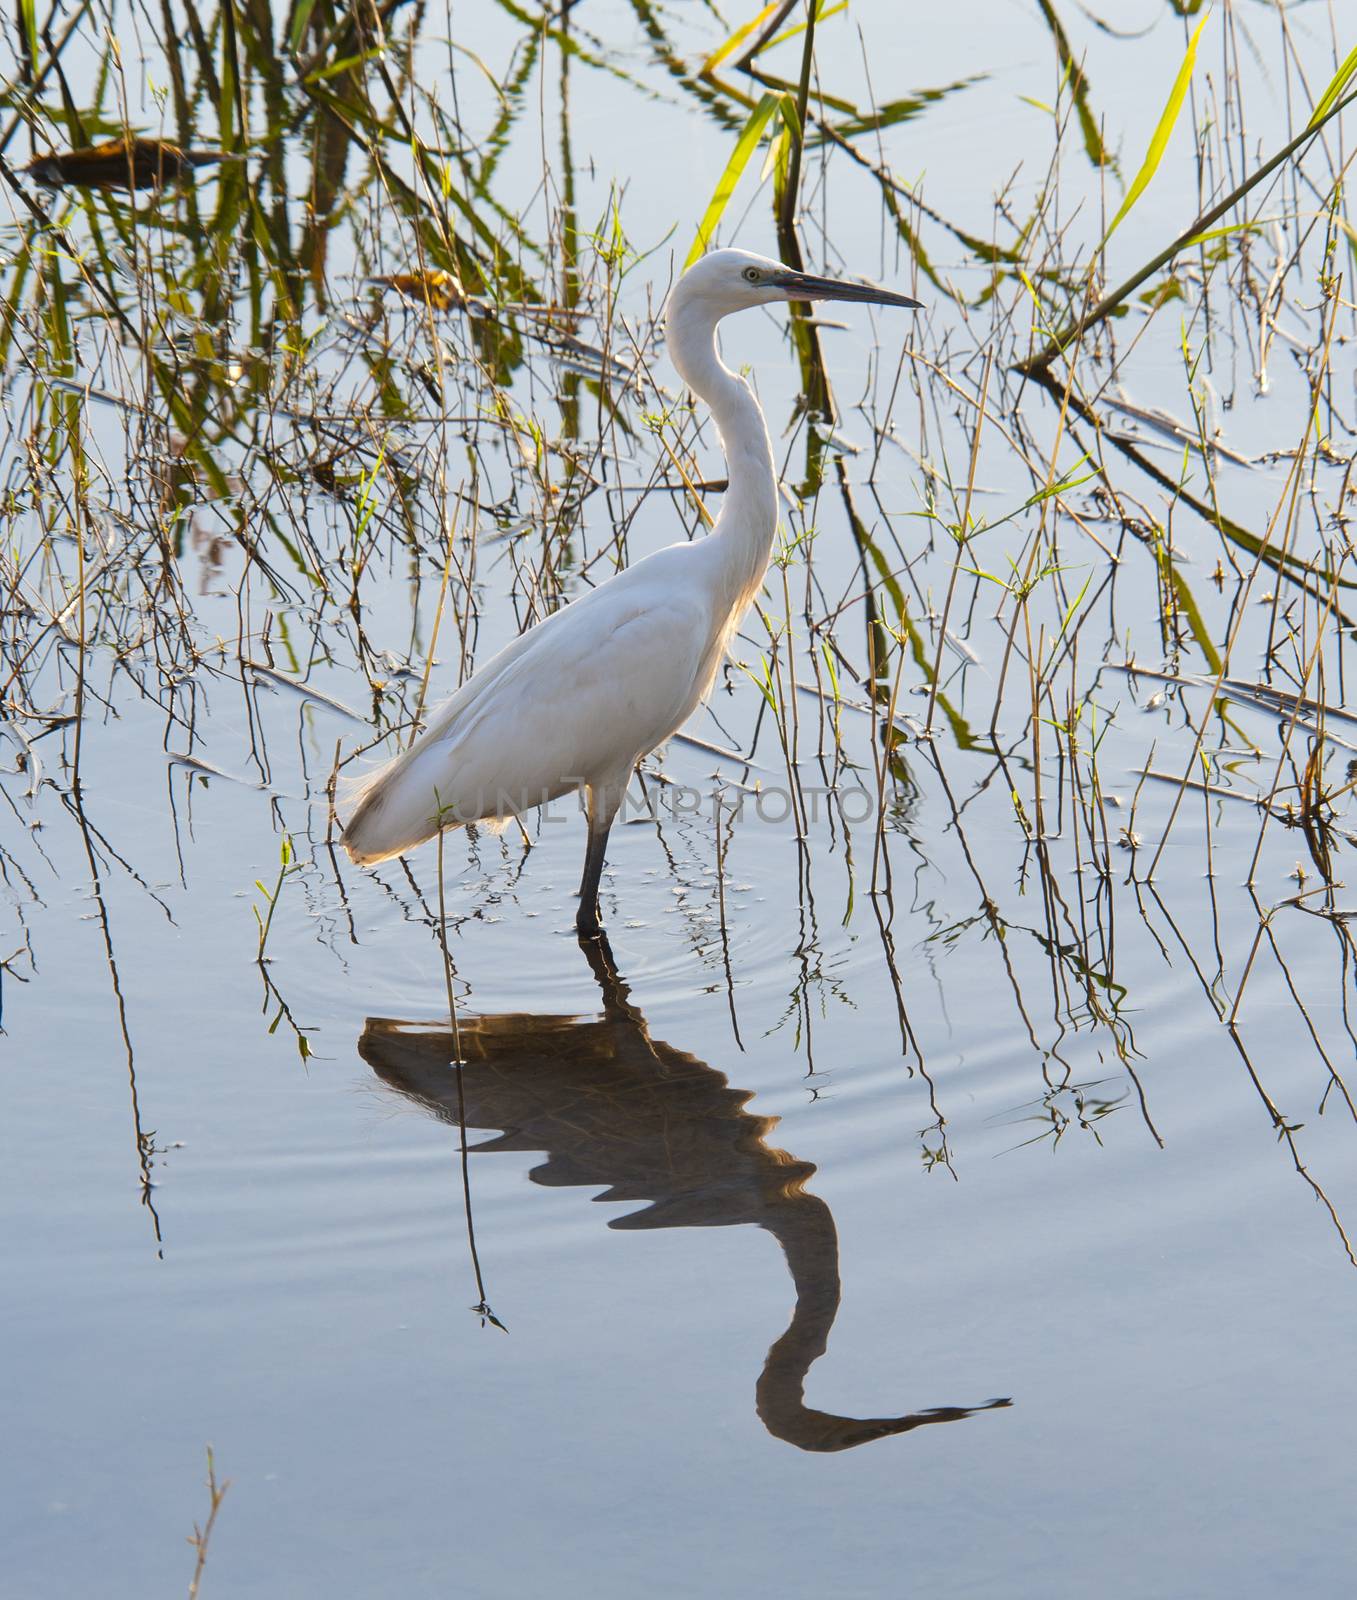 Little egret wild bird wading through reeds in shallow water of river